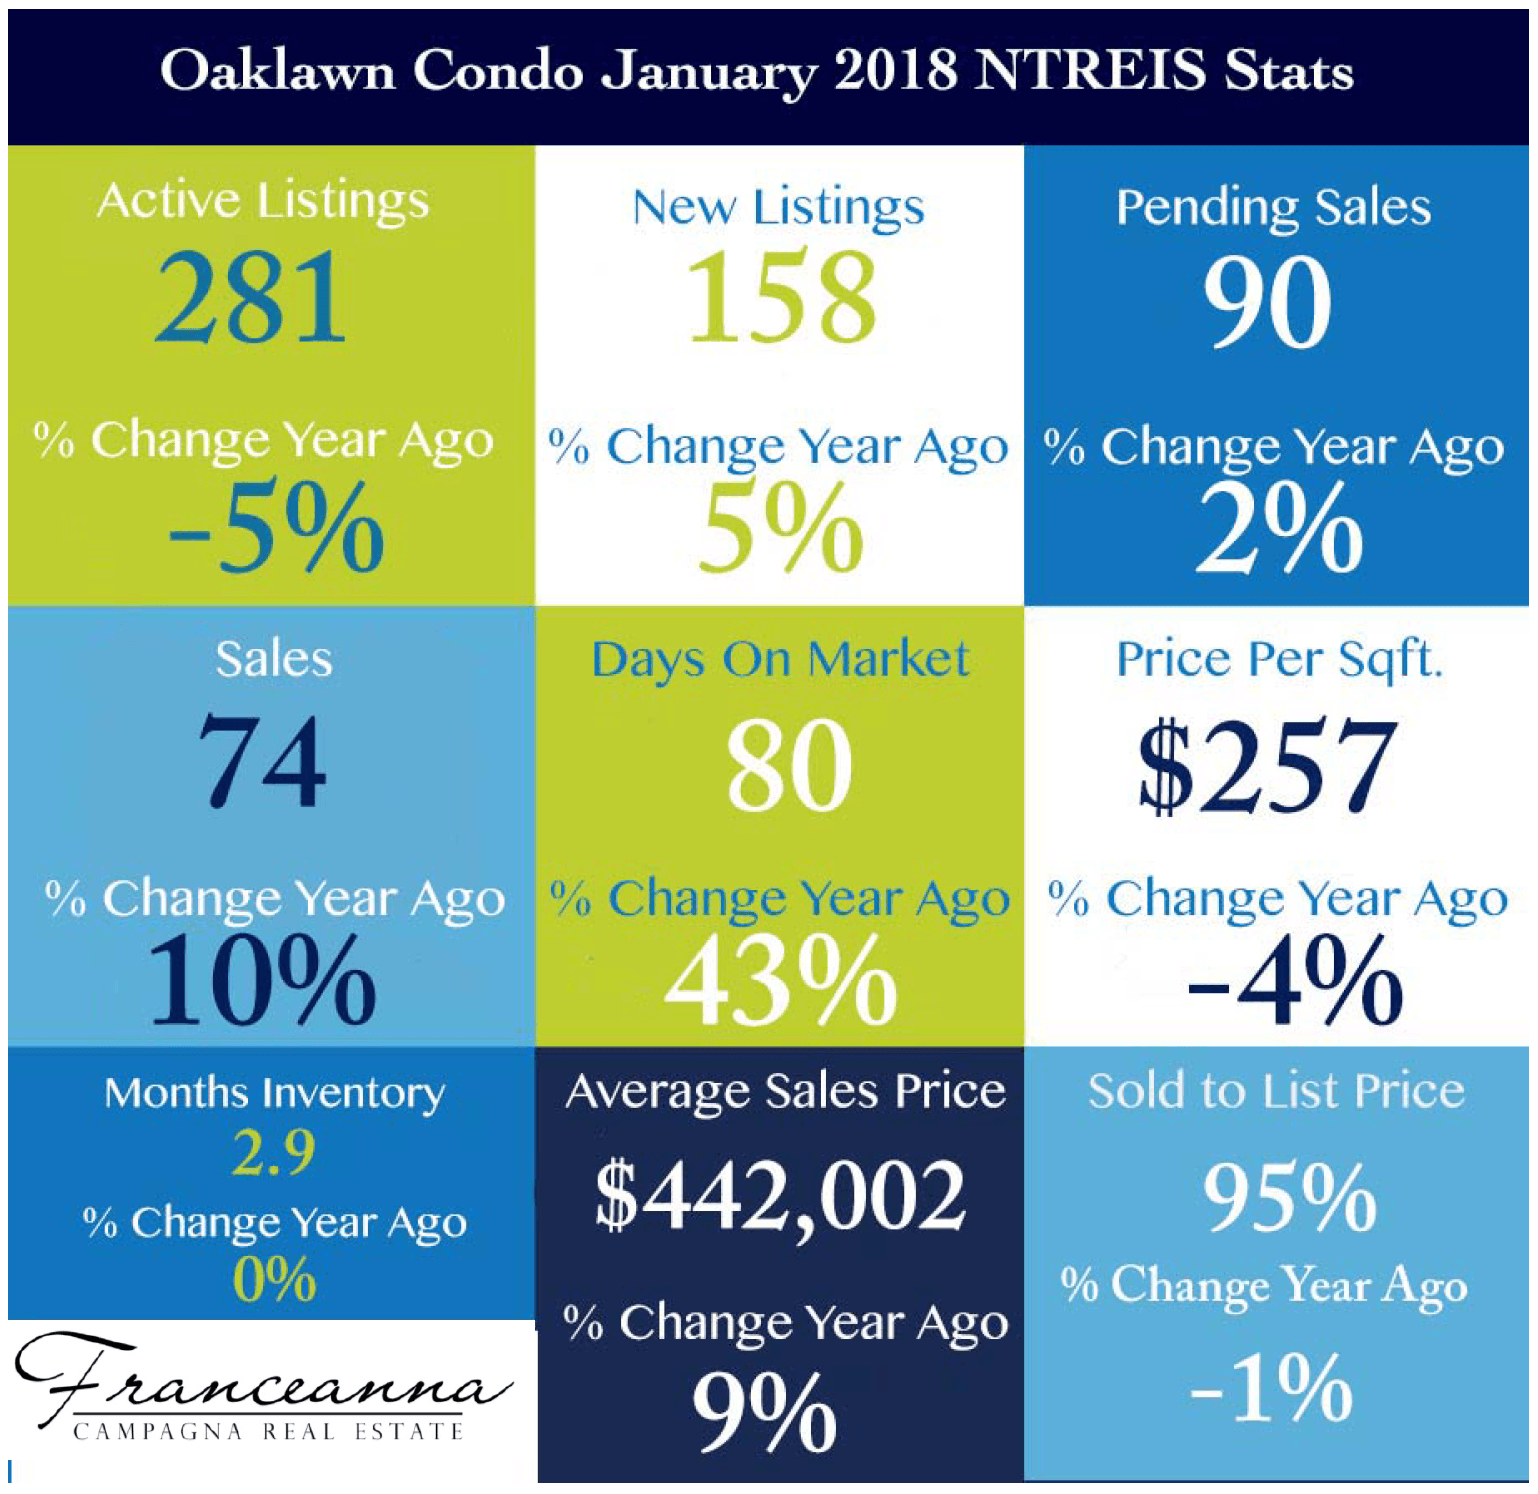 Oaklawn Condo January 2018 NTREIS Stats